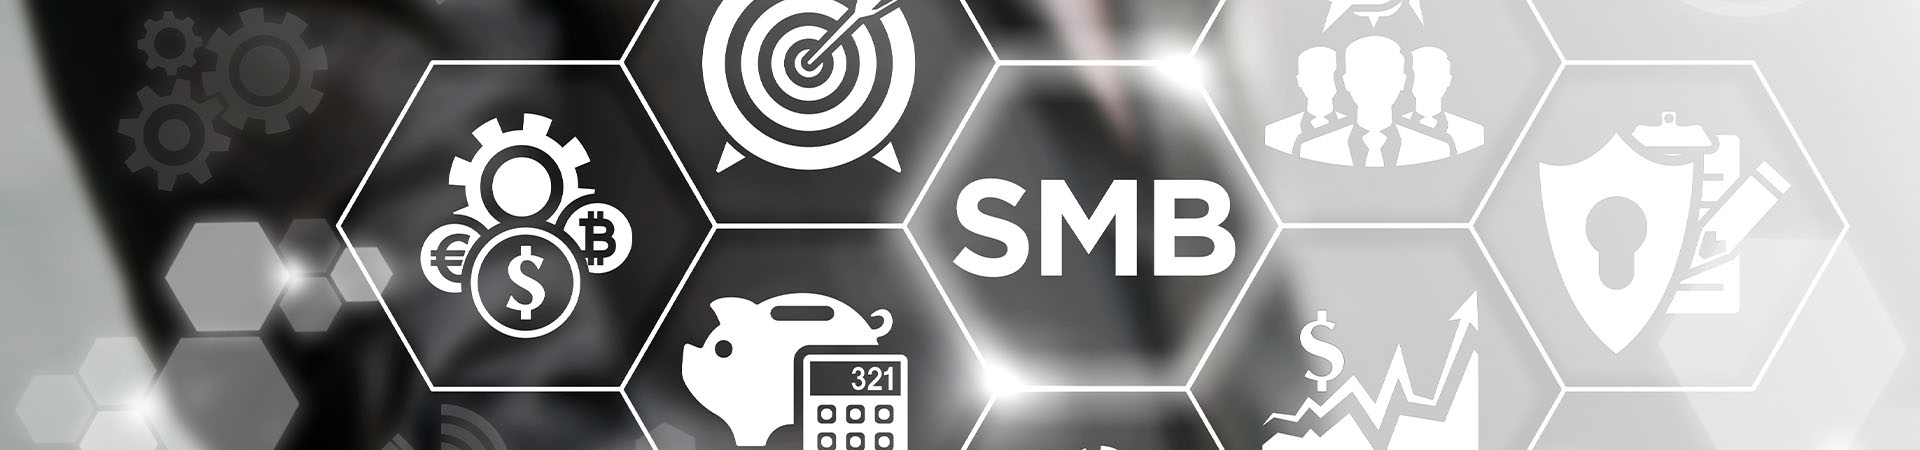 Mid-Market digital transformation solutions for Small-Medium Businesses – SMB, Small-Medium Enterprises – SME from Altair.